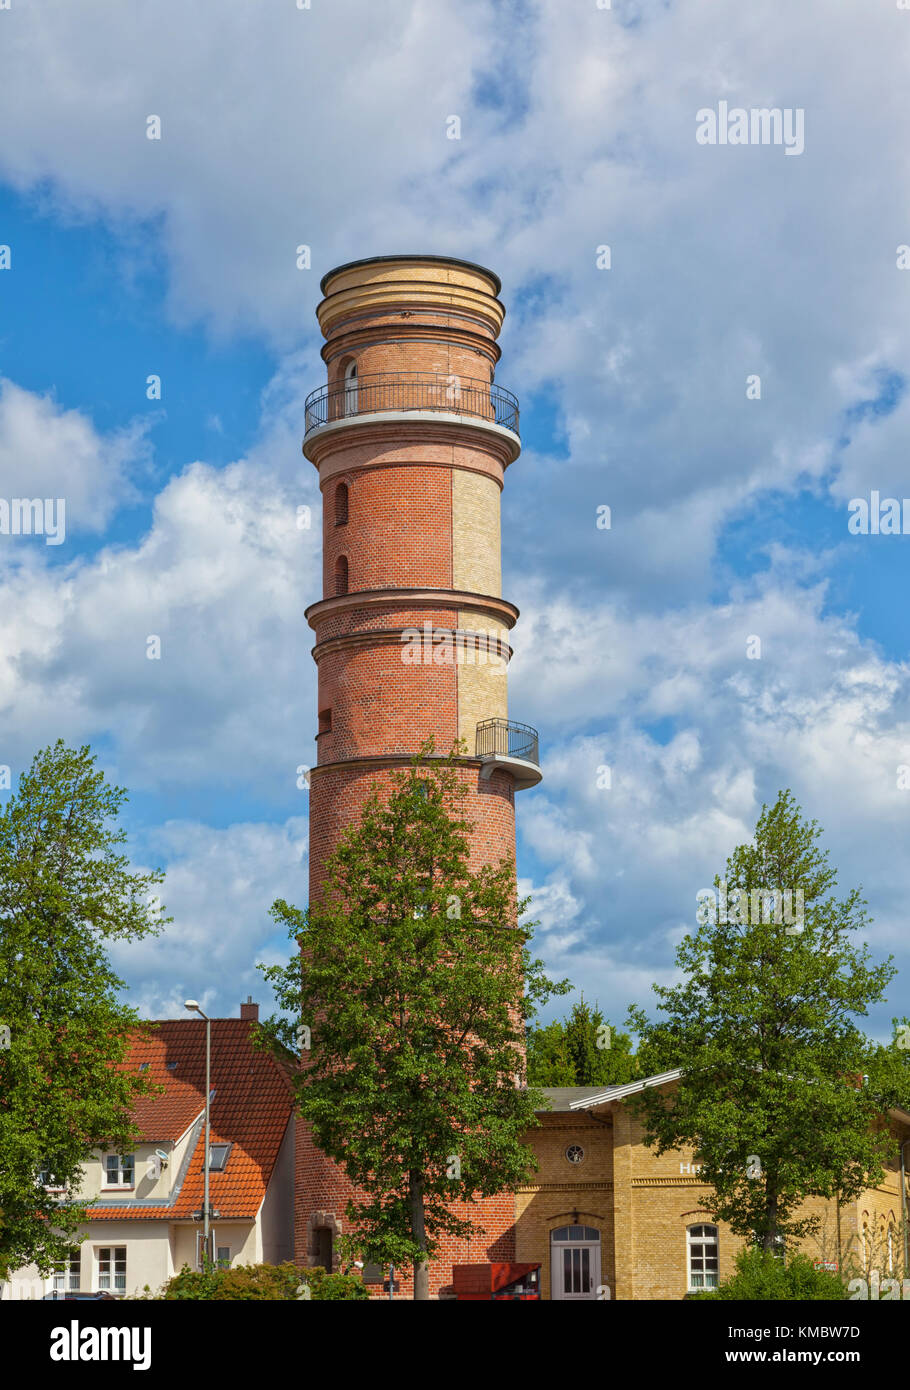 Ancien phare, Lübeck-Travemümde, Allemagne Banque D'Images